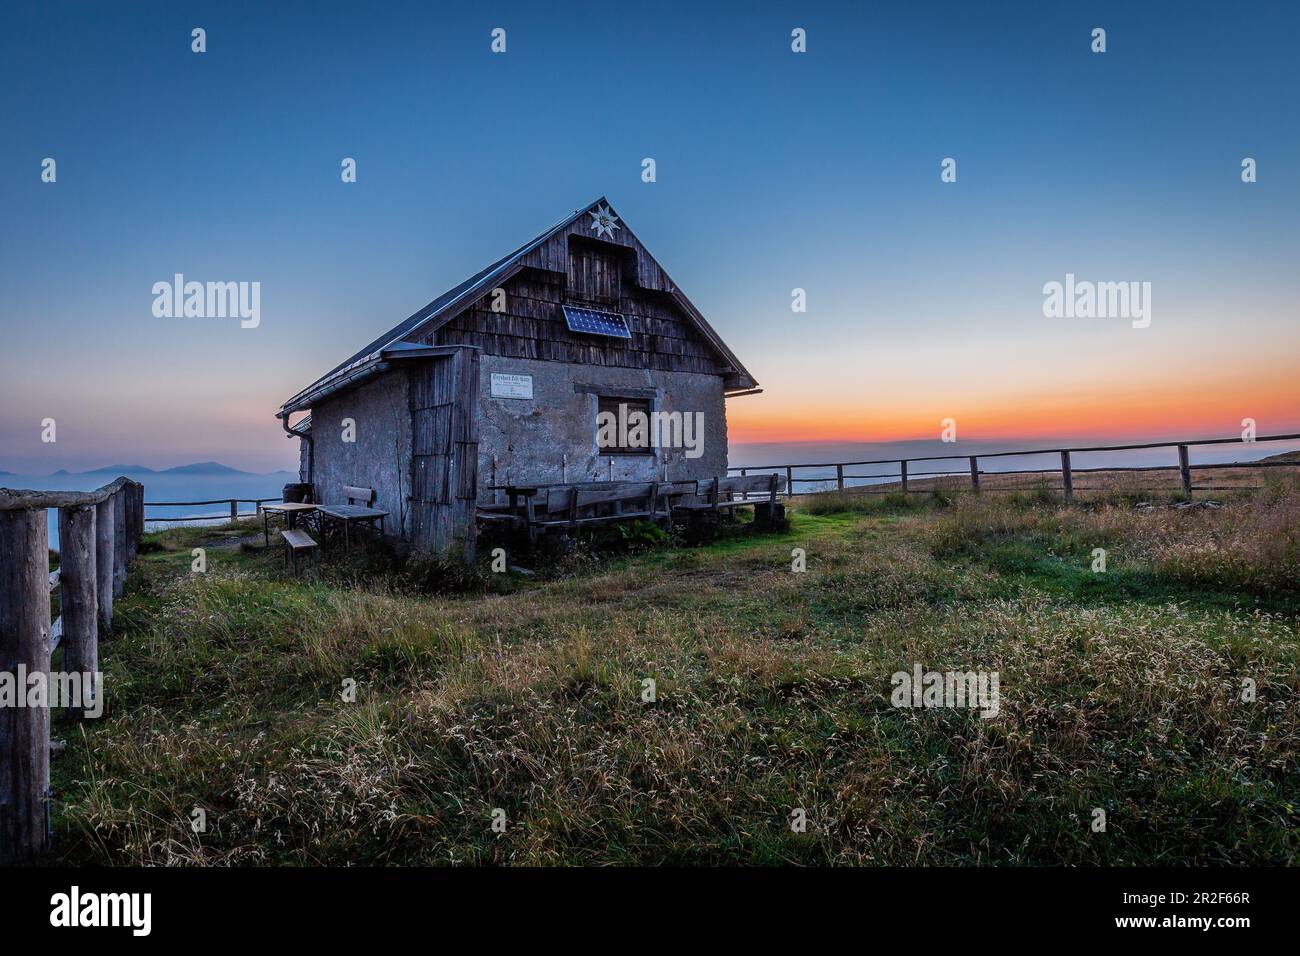 The Murauer Hütte at sunrise on the Frauenalpe, Murau, Austria Stock Photo